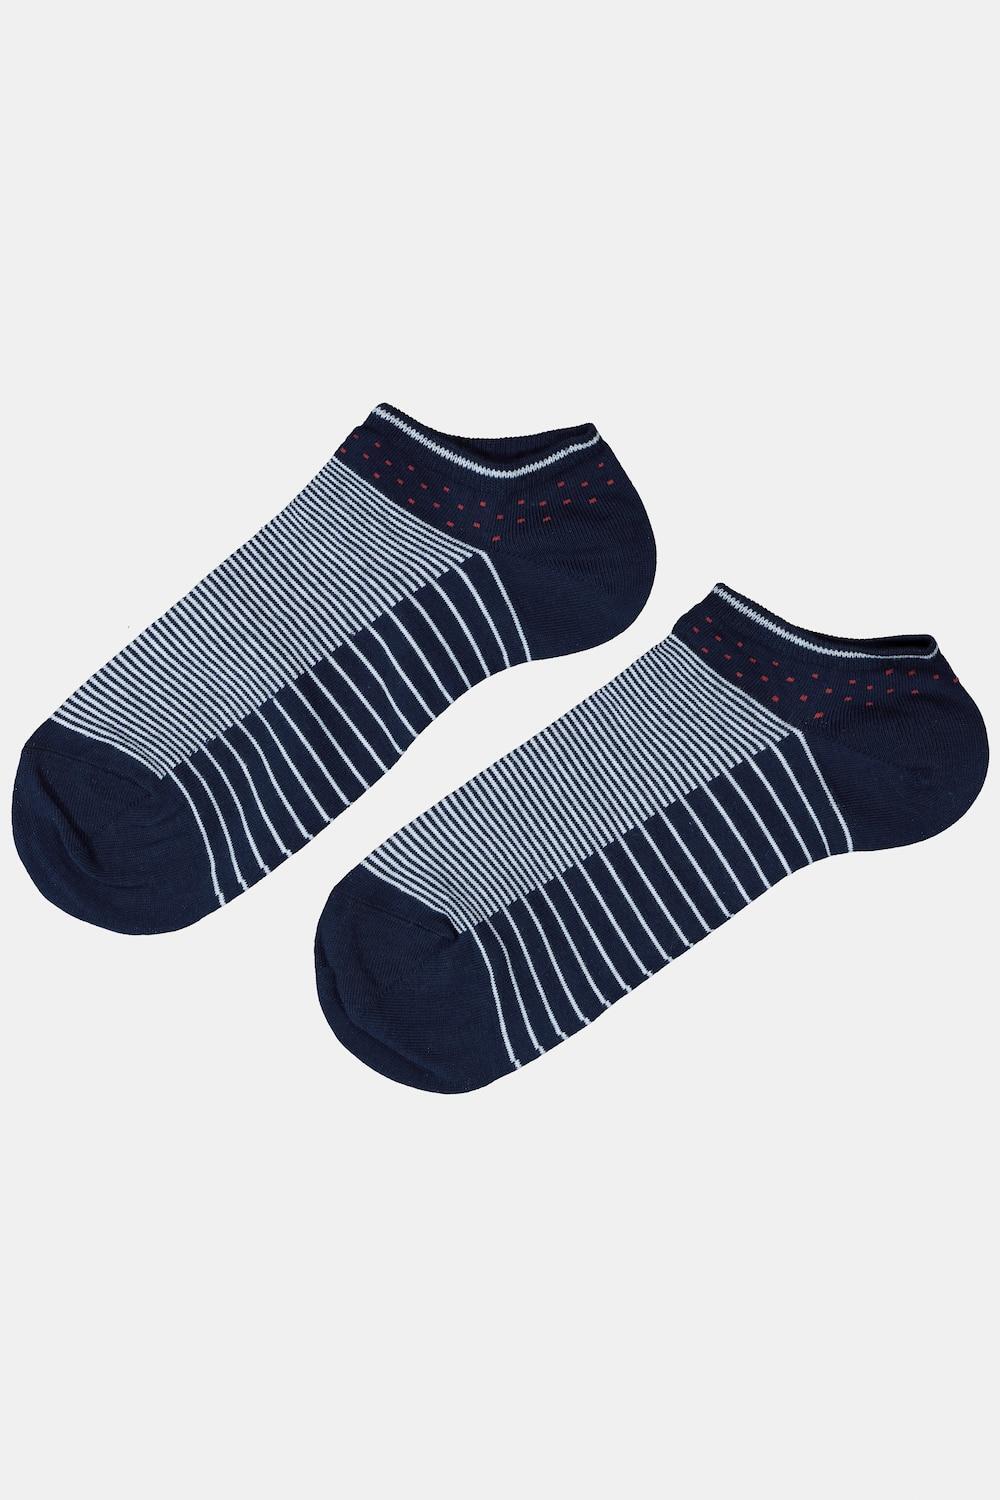 Stripe Dot Low Cut Stretch Socks